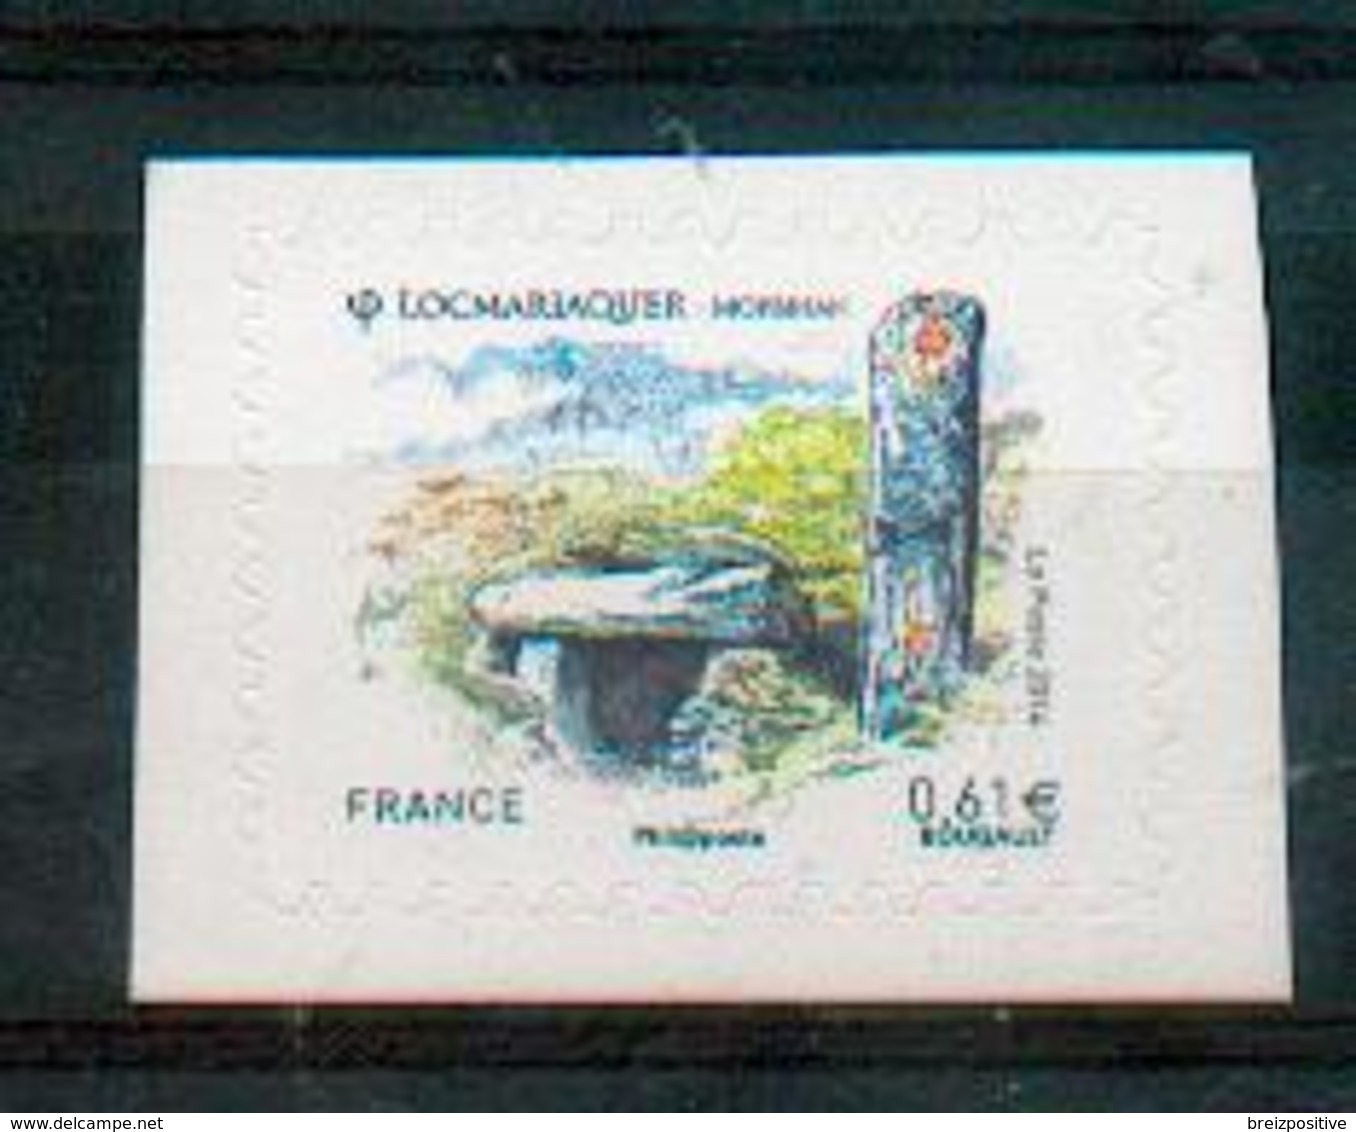 France 2014 - Locmariaquer, Morbihan, Bretagne / Brittany - Menhir And Dolmen - MNH - Archéologie